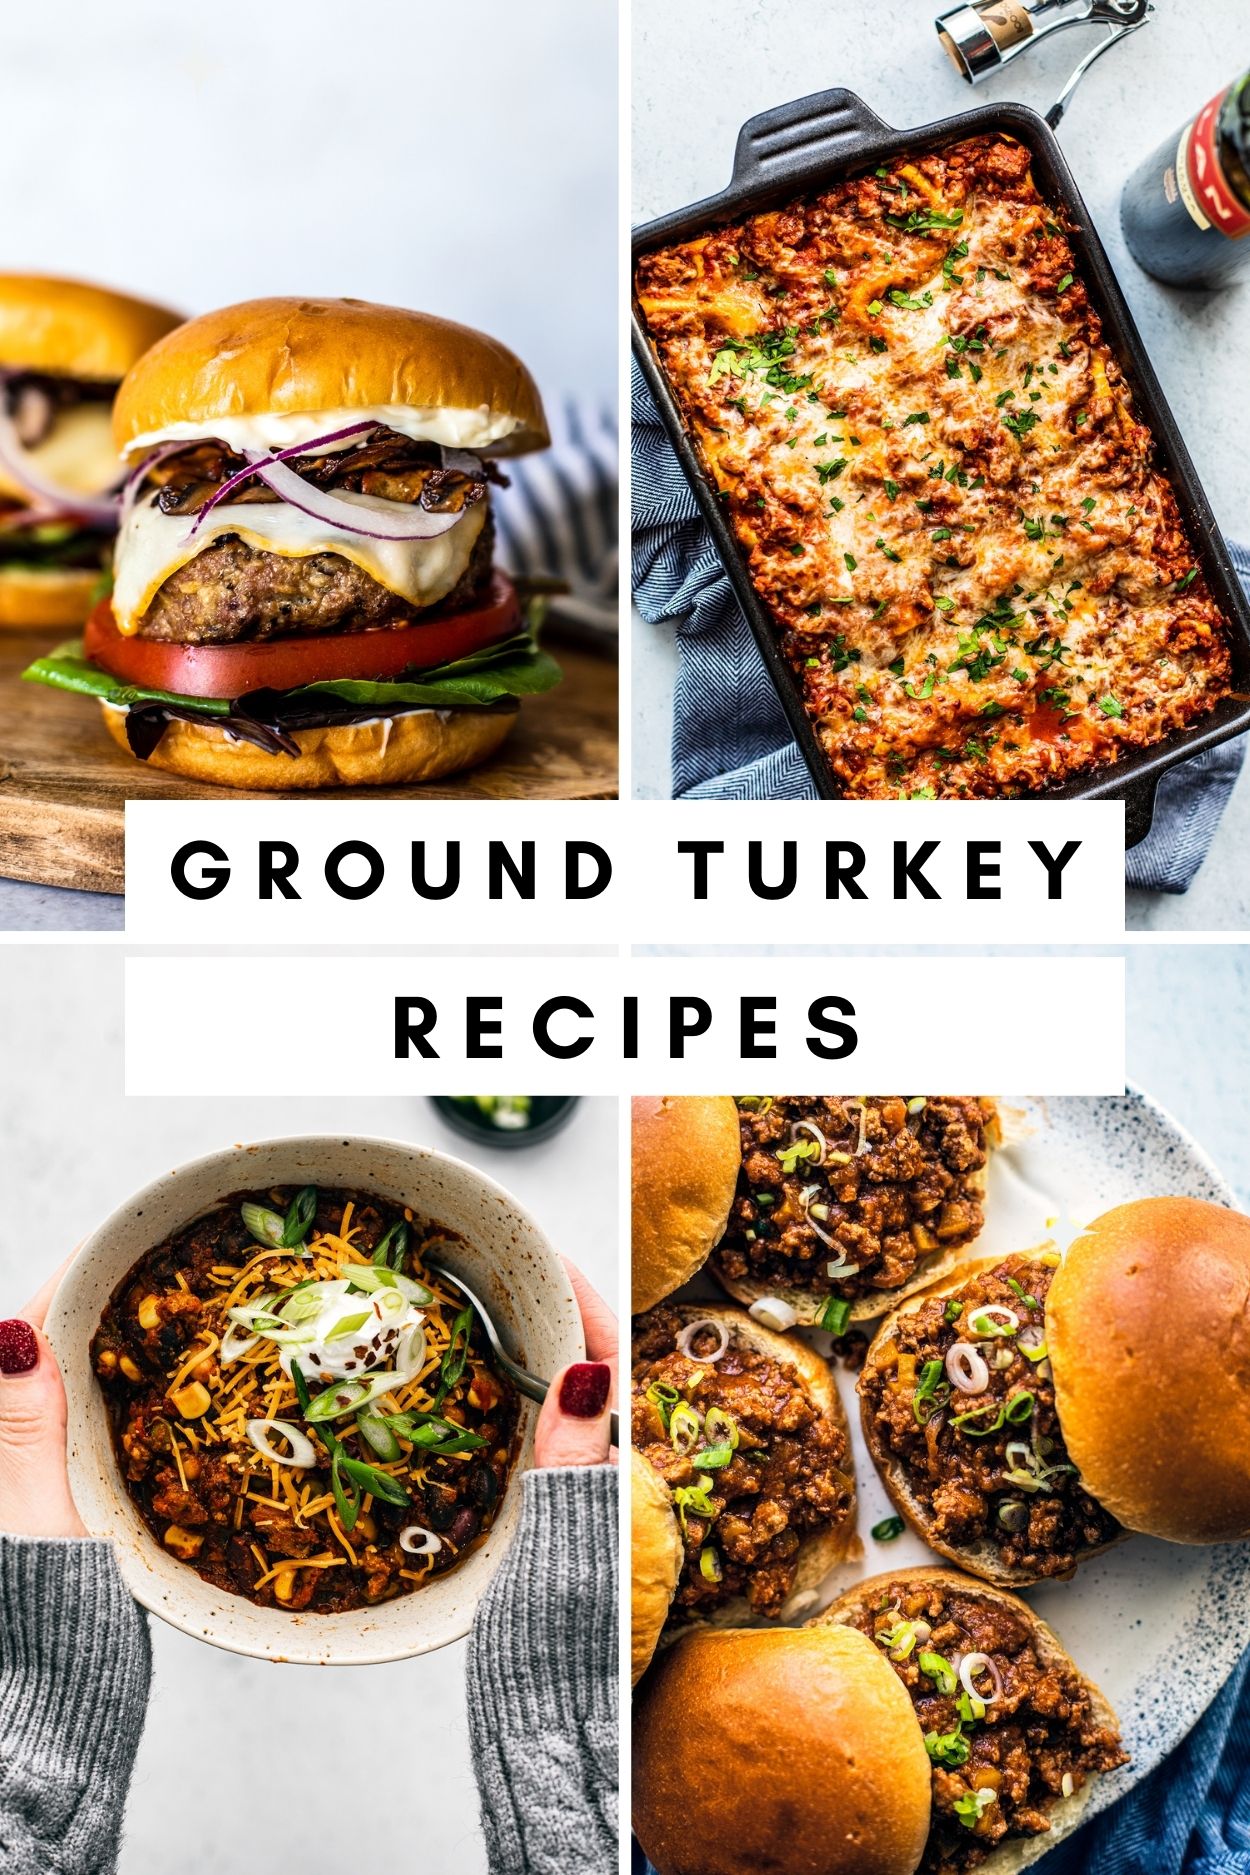 Ground turkey recipes